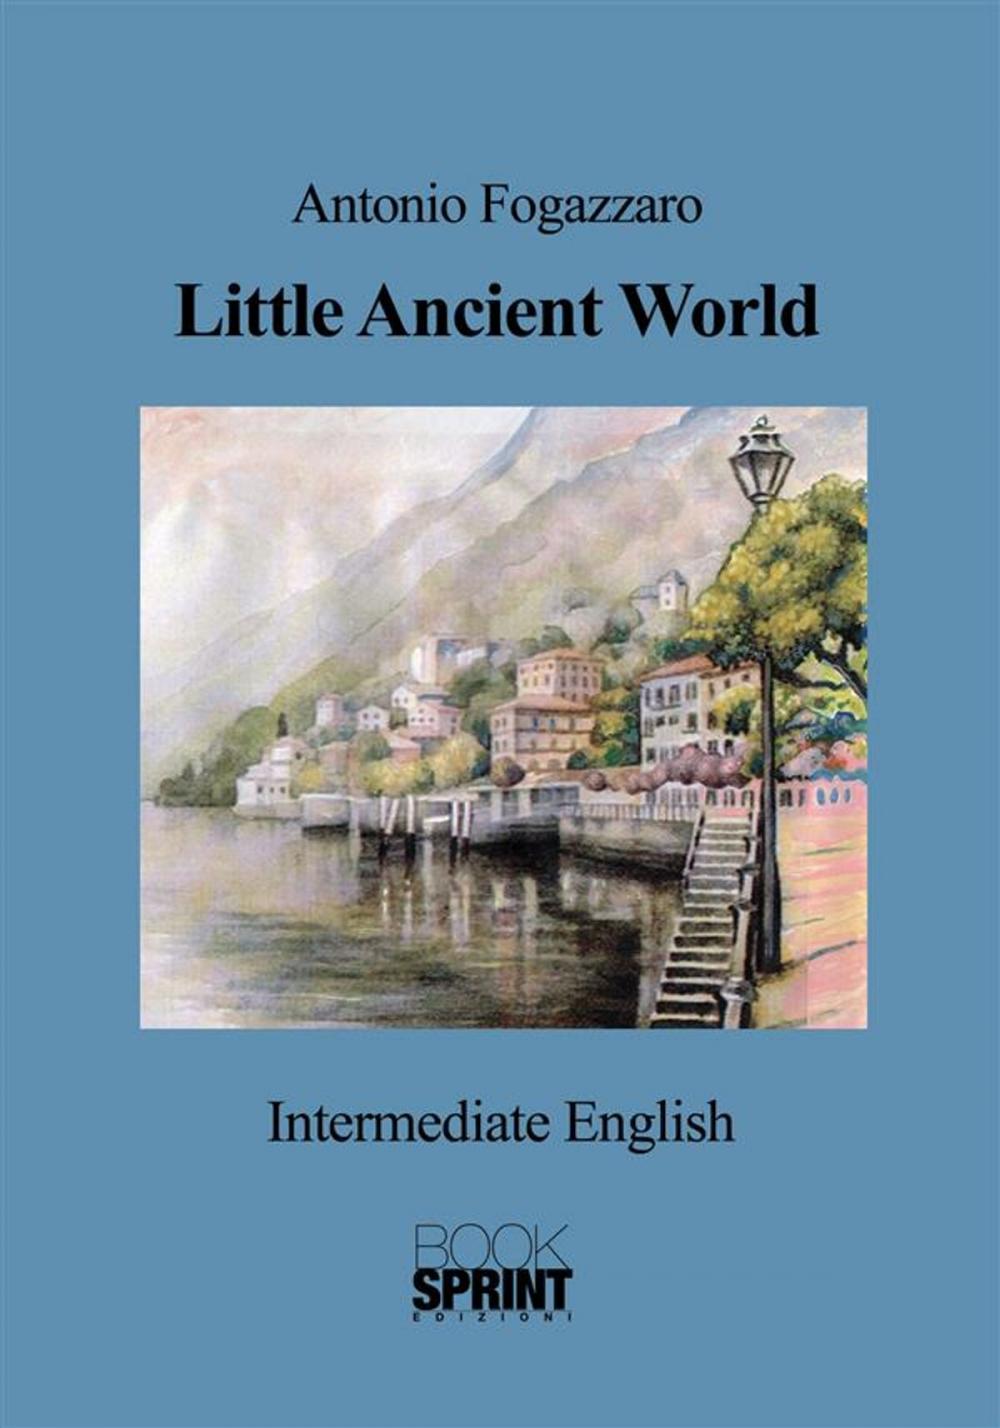 Big bigCover of Little Ancient World (Antonio Fogazzaro)